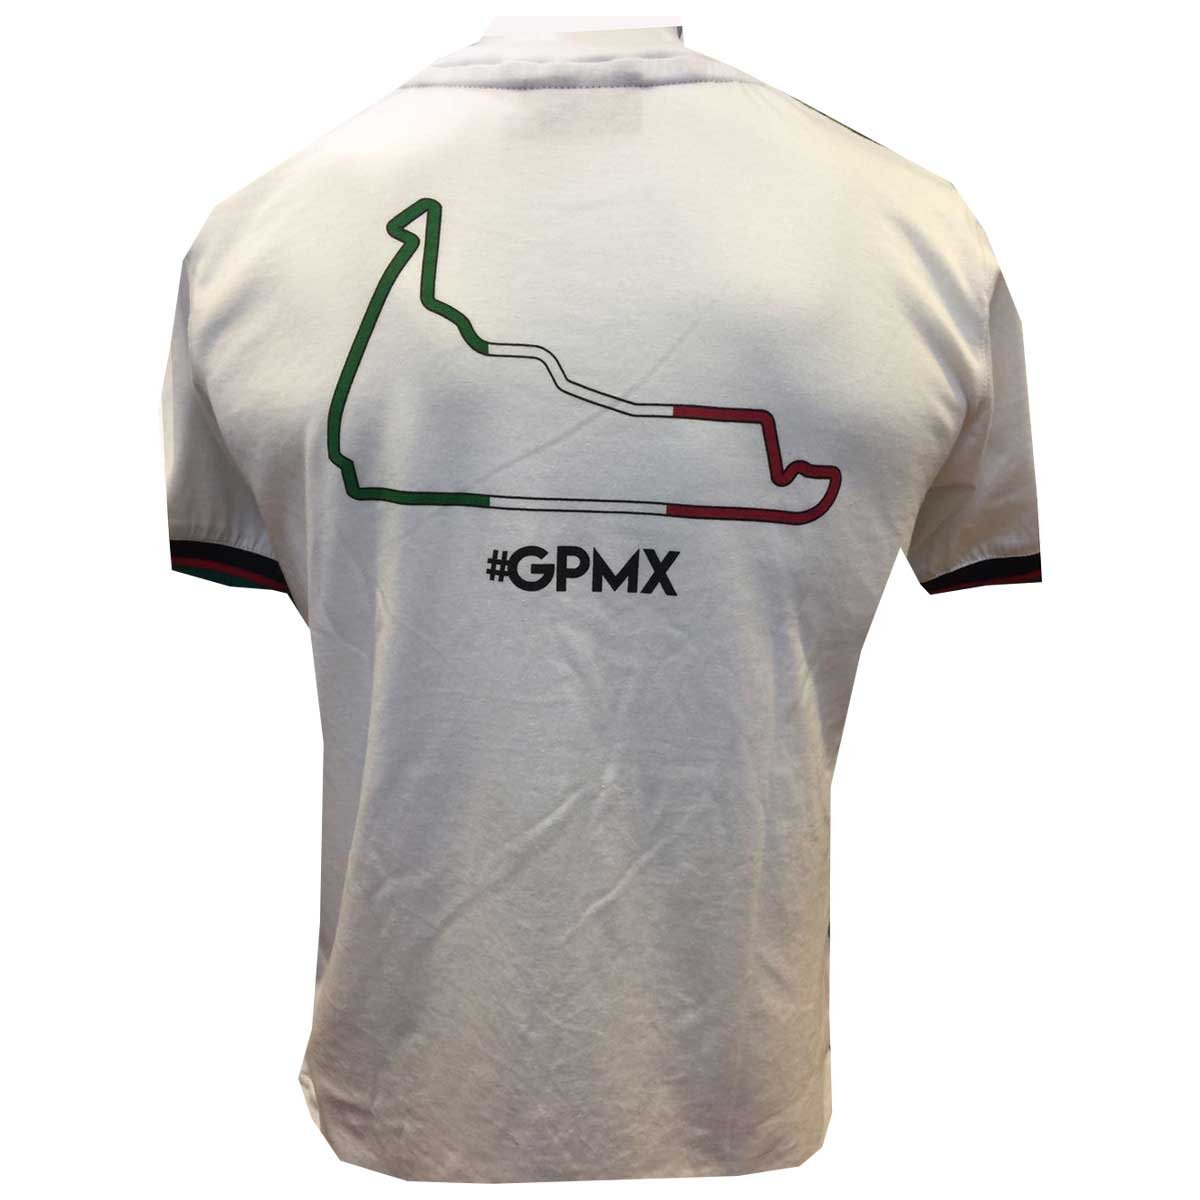 Playera Gpmx 17 Pole Position